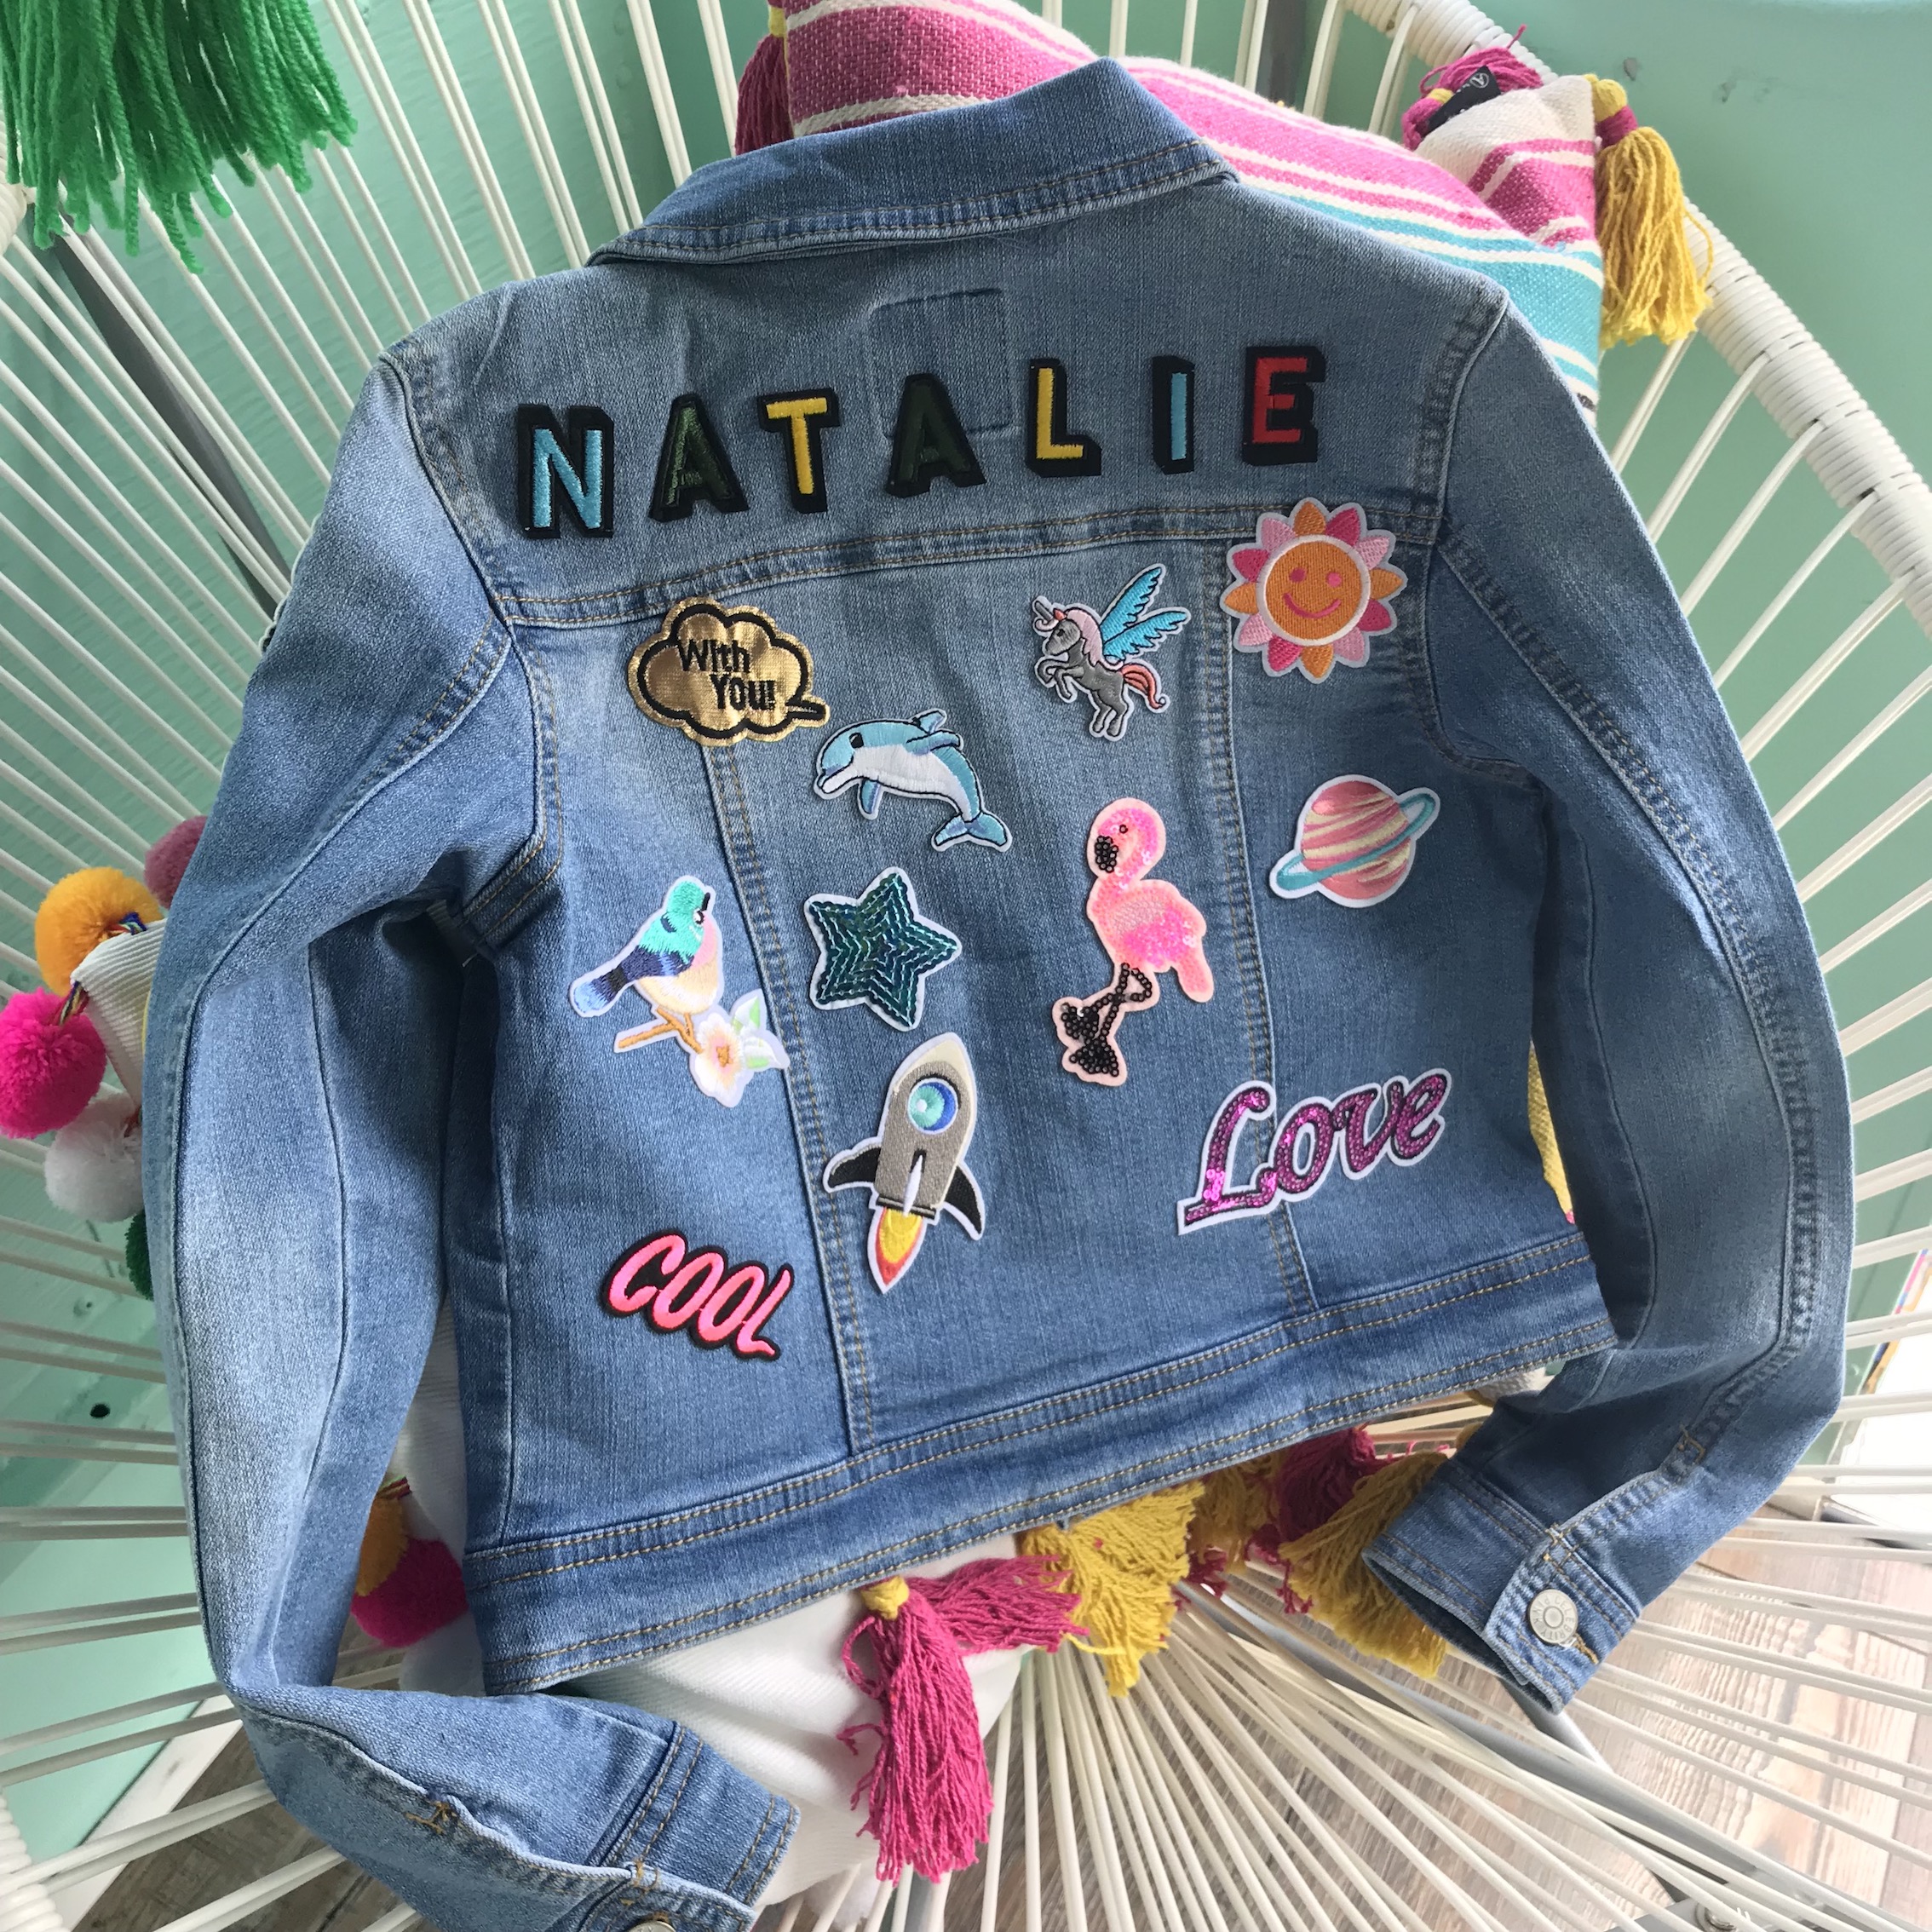 Natalie's Jean Jacket